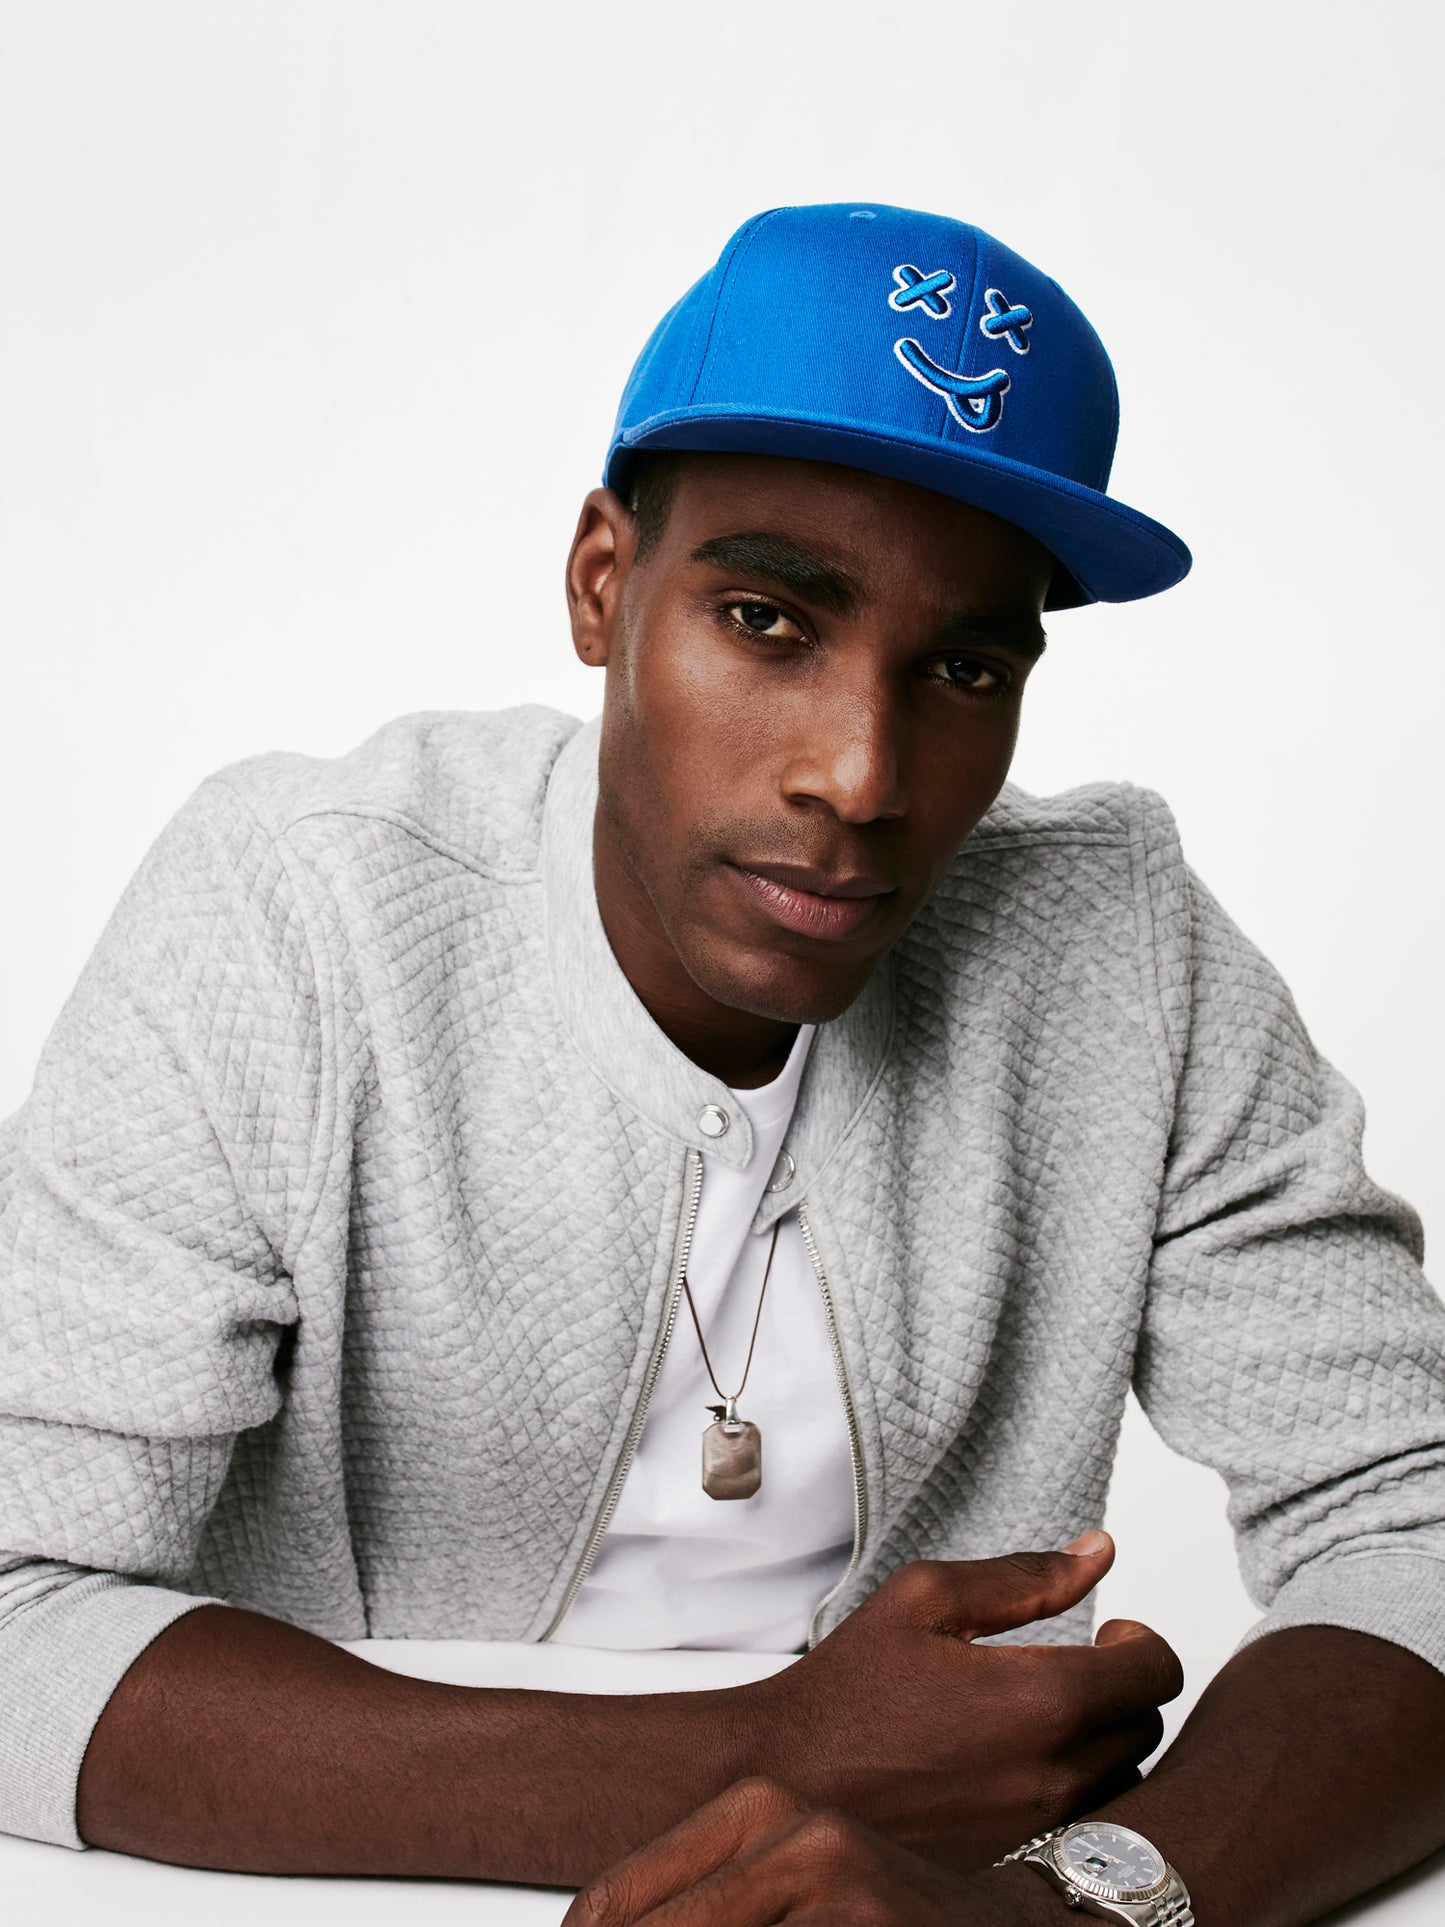 MOOD male model wearing XX OG flat brim baseball cap in loyal blue looking good